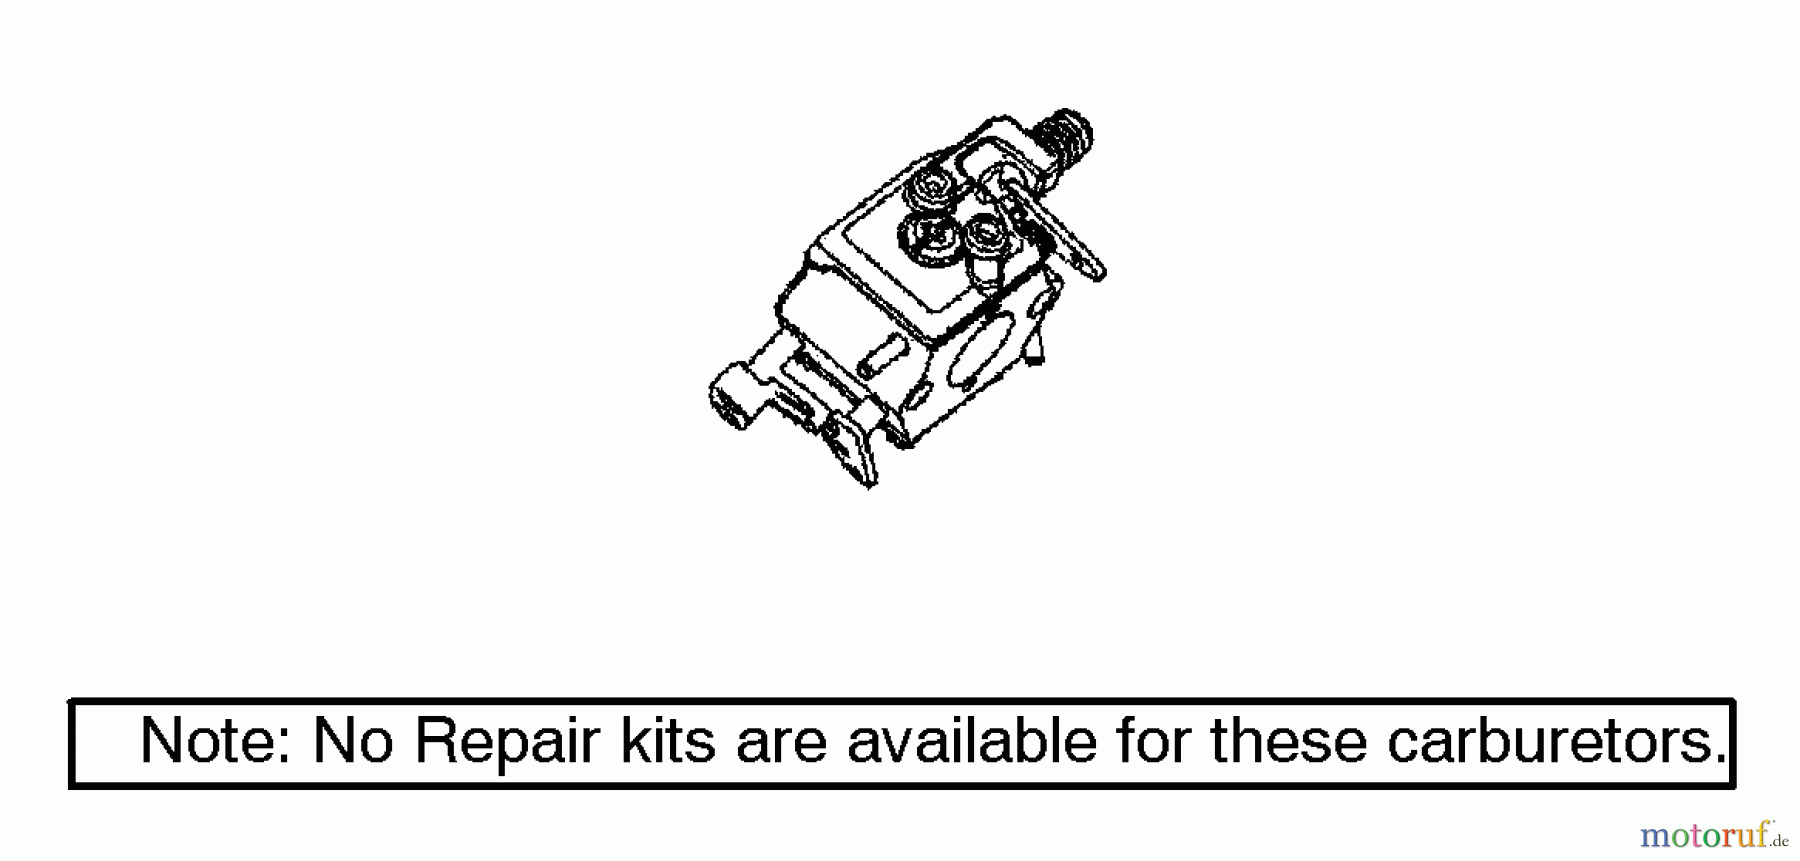  Poulan / Weed Eater Motorsägen 2050 (Type 1) - Poulan Pioneer Chainsaw Carburetor Assembly Kits 530071620/530071820/530071821